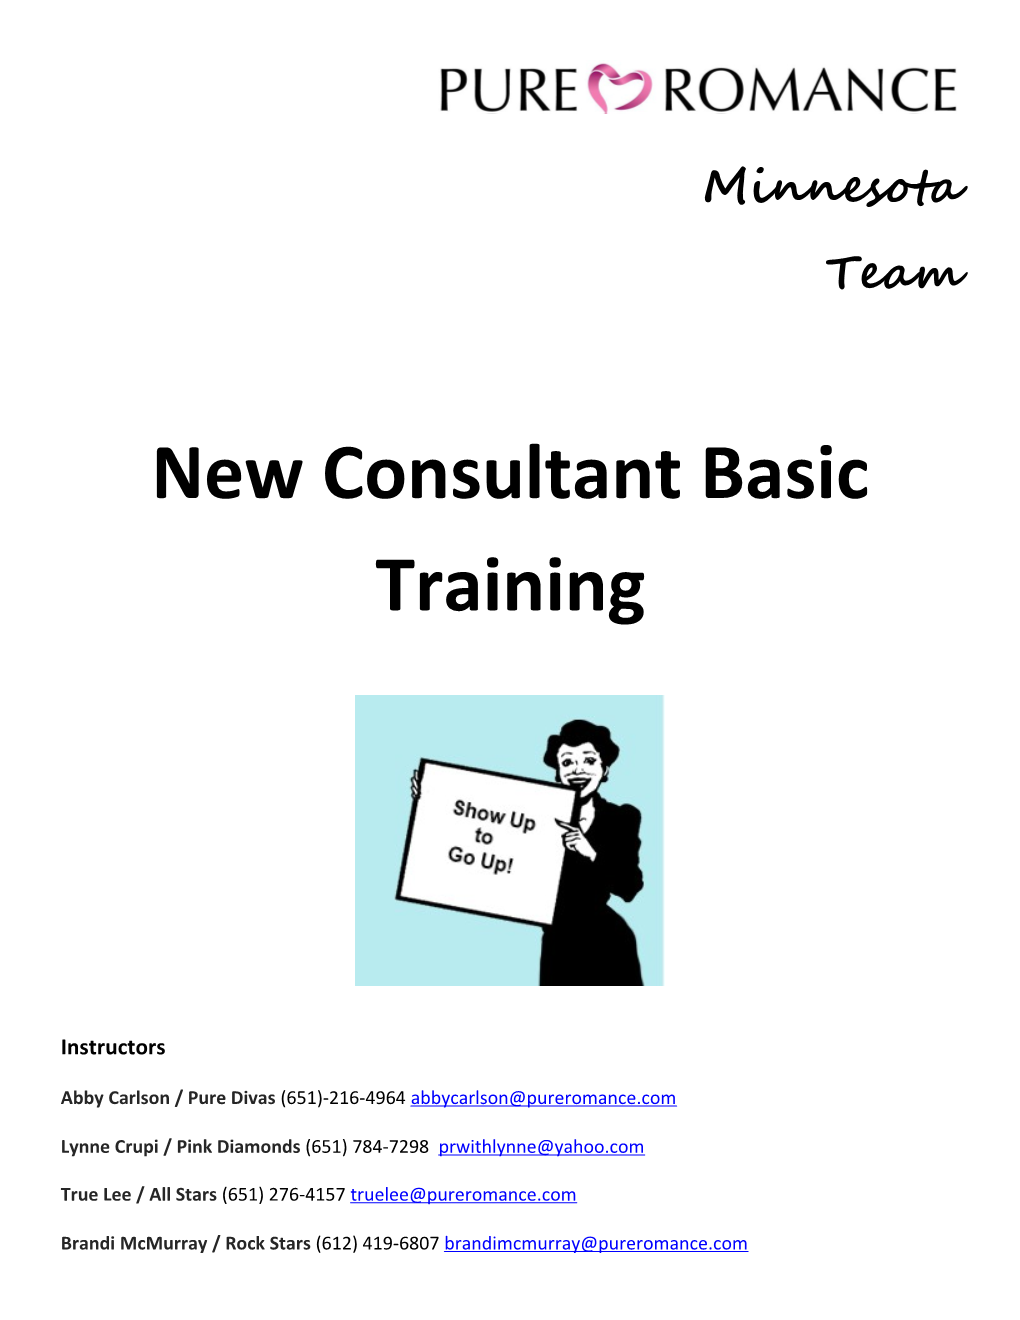 New Consultant Basic Training